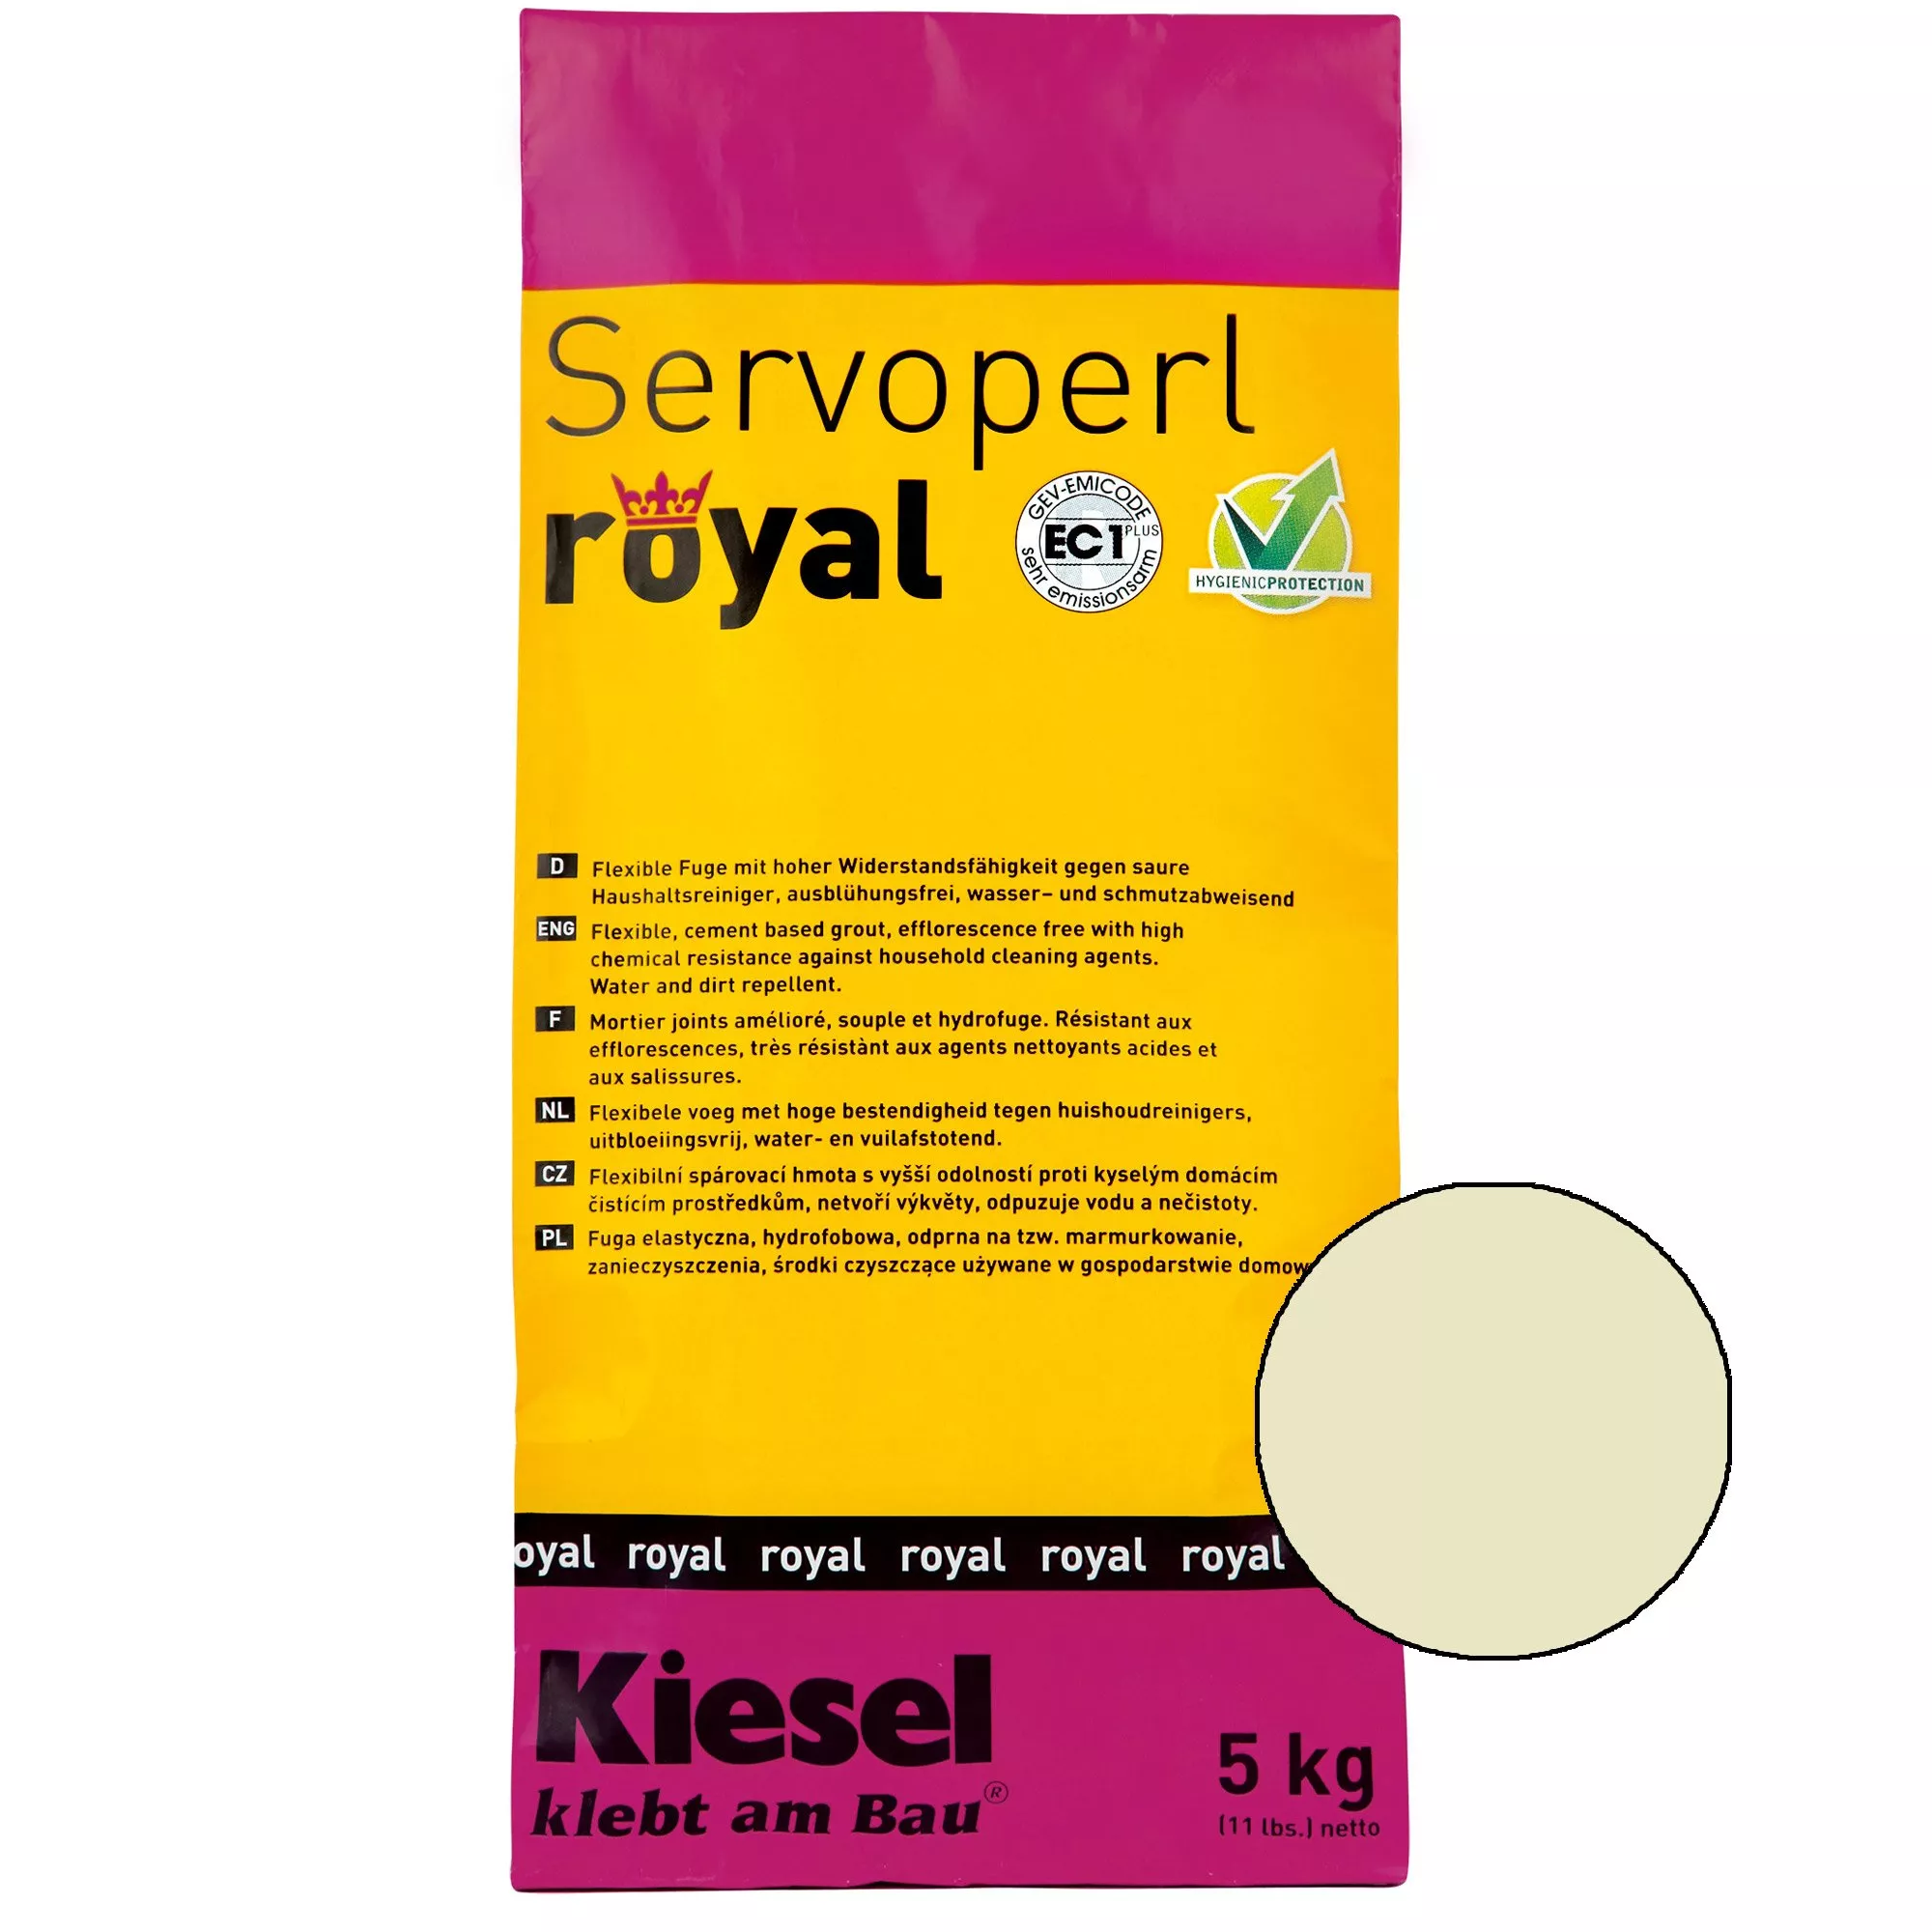 Kiesel Servoperl Royal - Elastyczna, Odporna Na Wodę I Brud Spoina (5KG Jasmin)